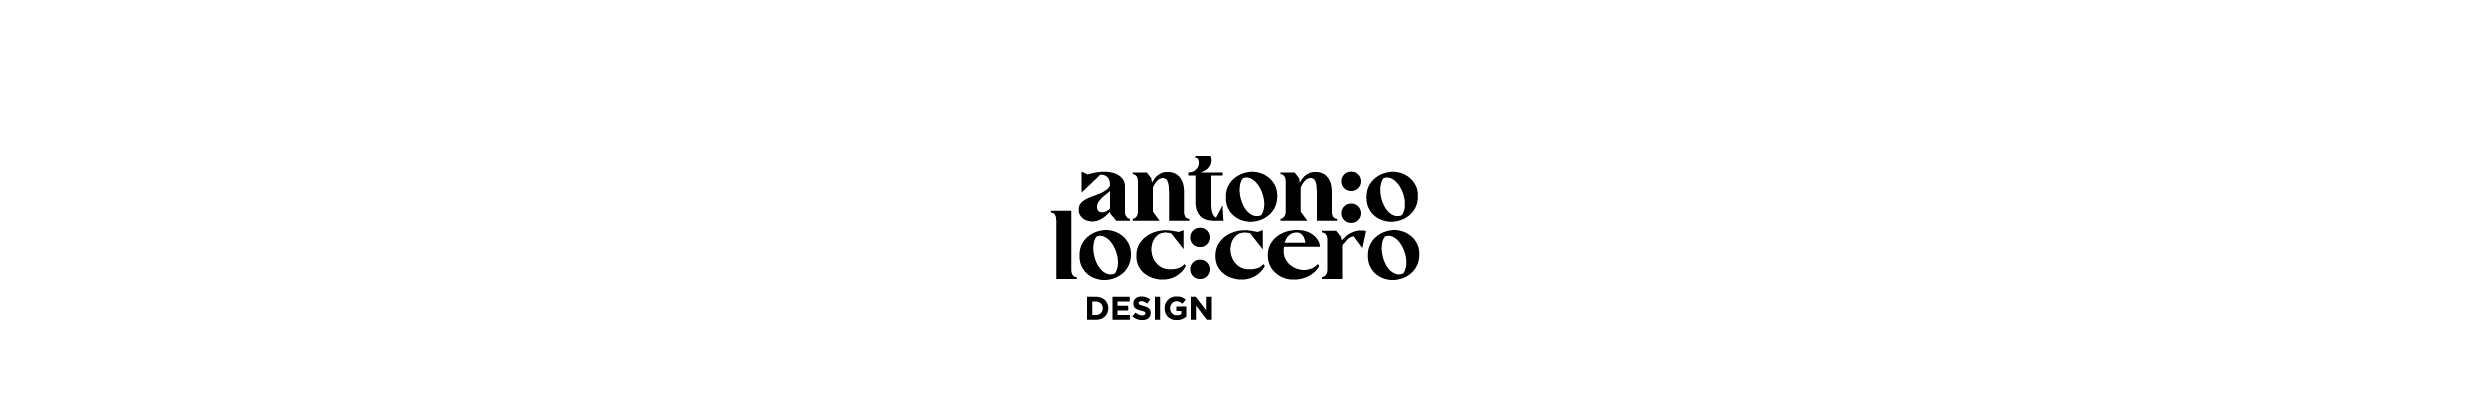 Antonio Locicero's profile banner